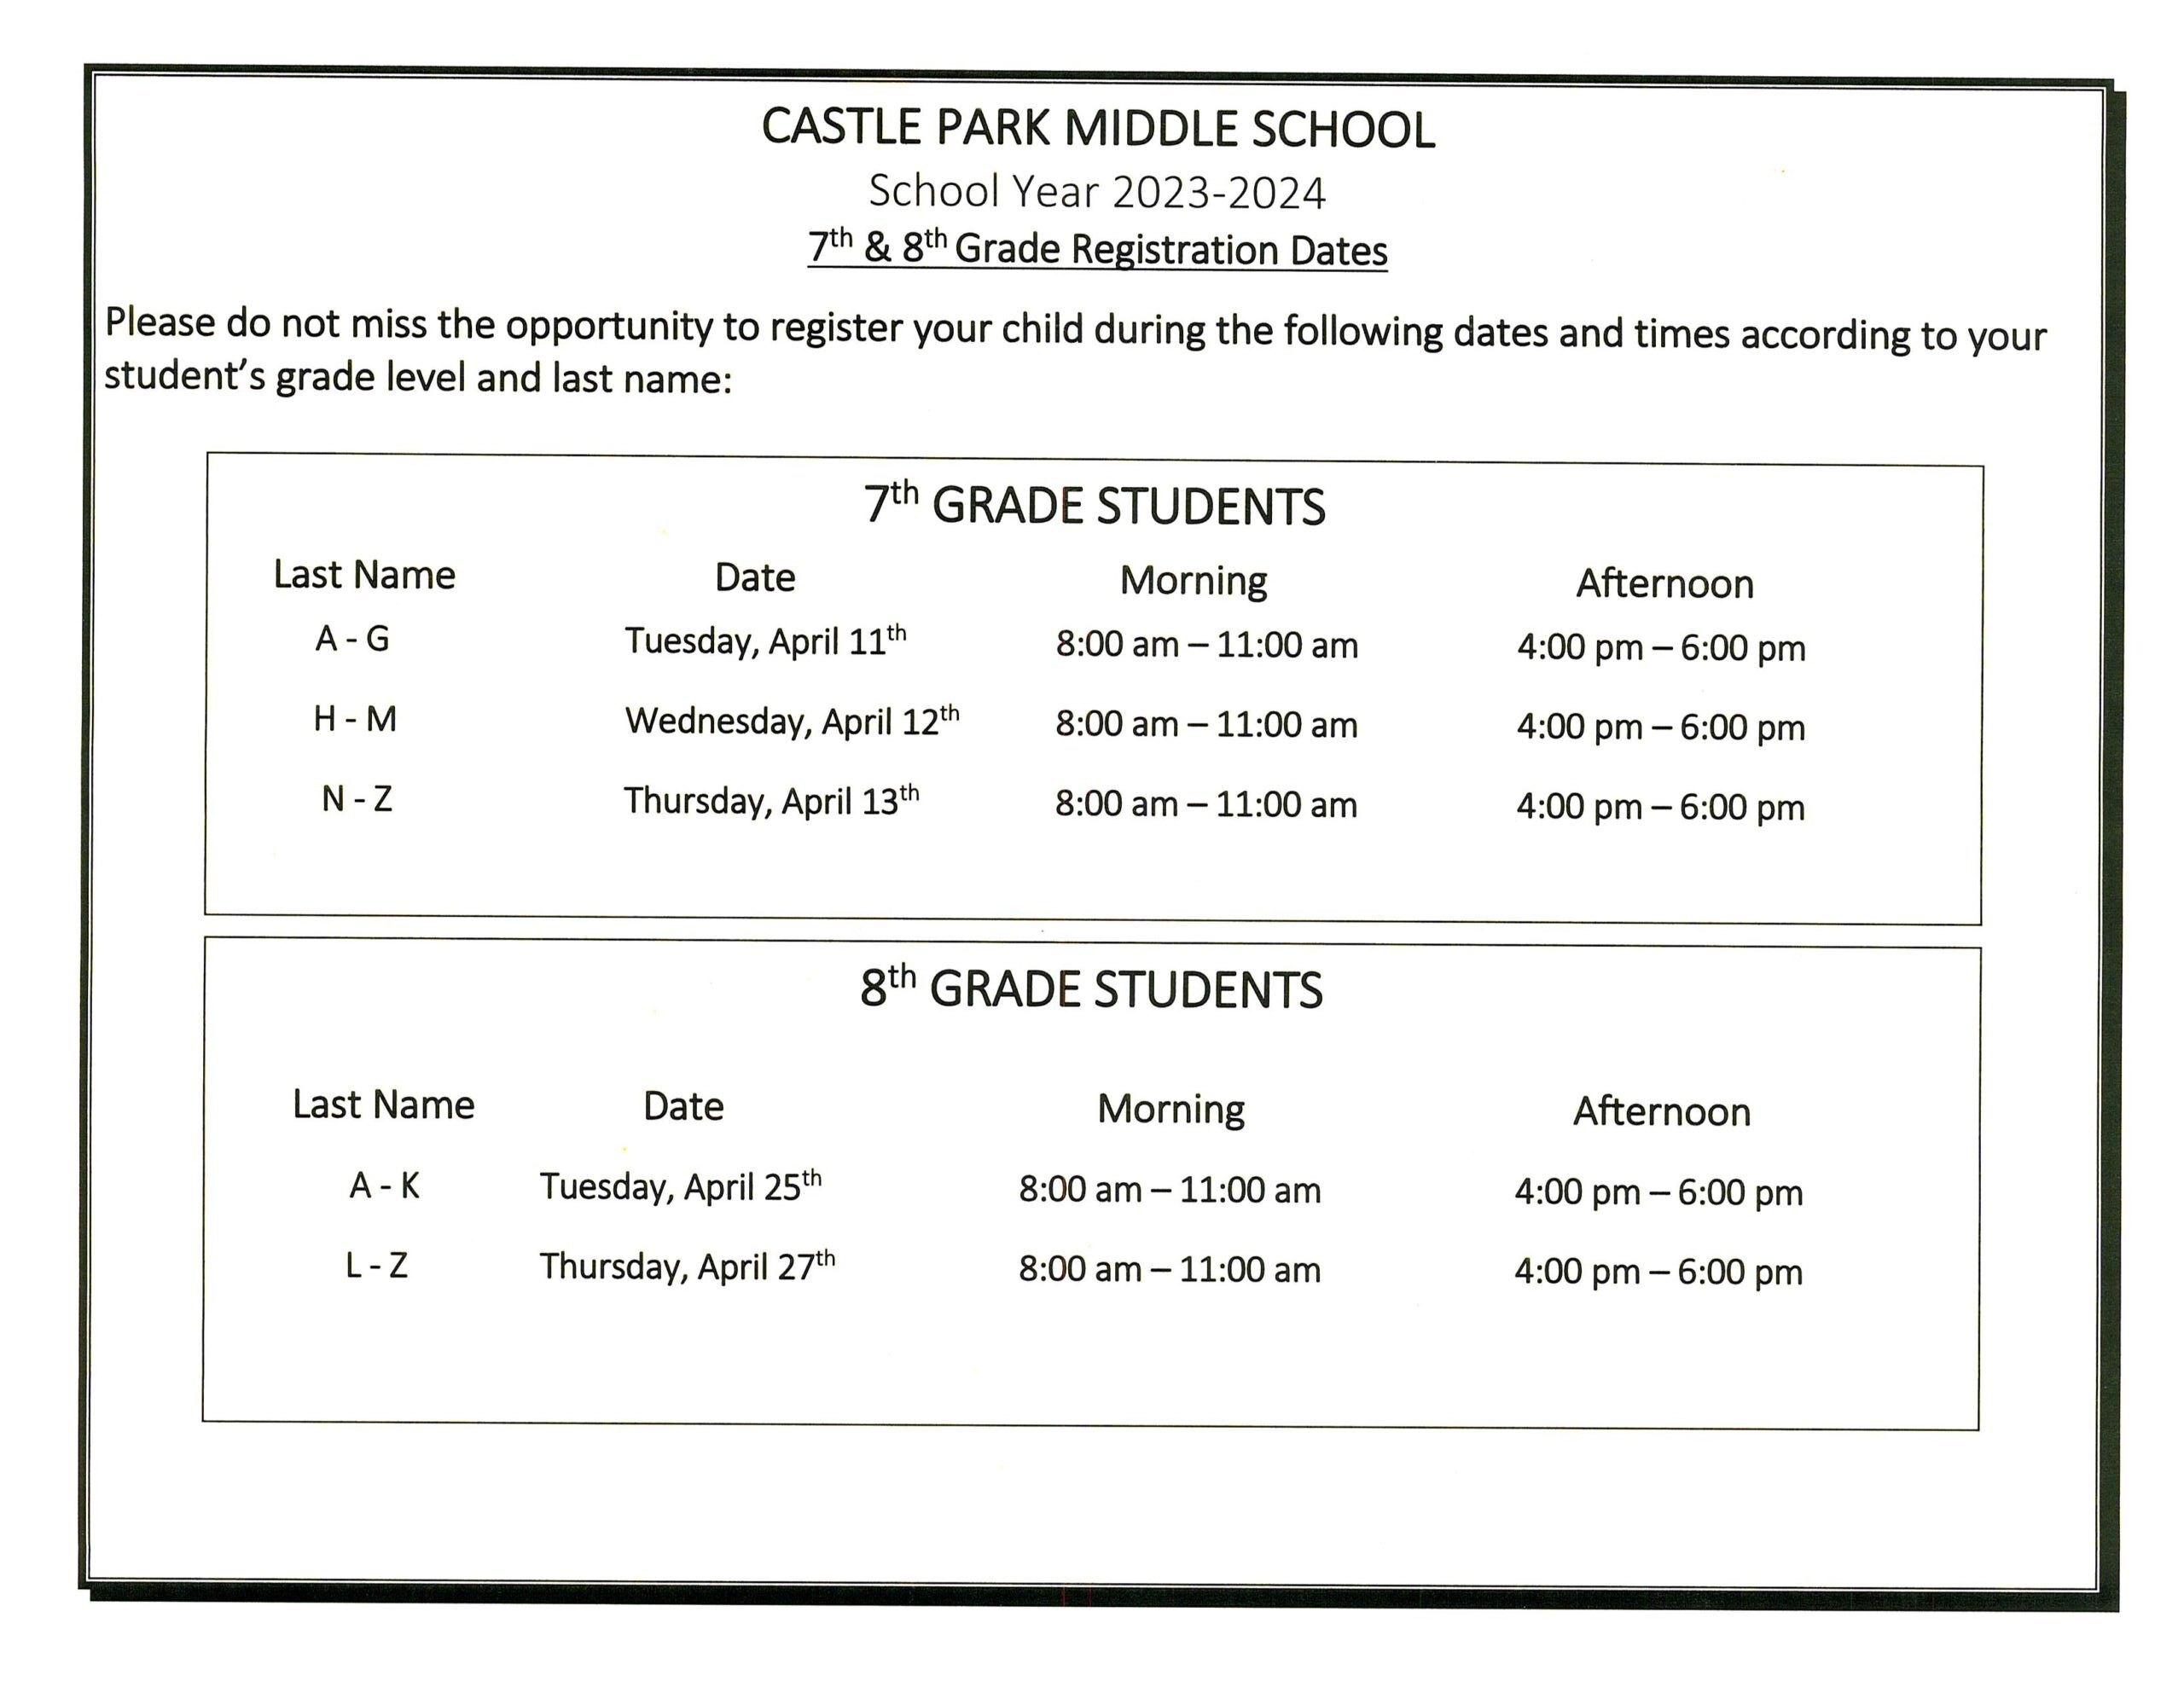 registration-dates-for-2023-24-school-year-castle-park-middle-school